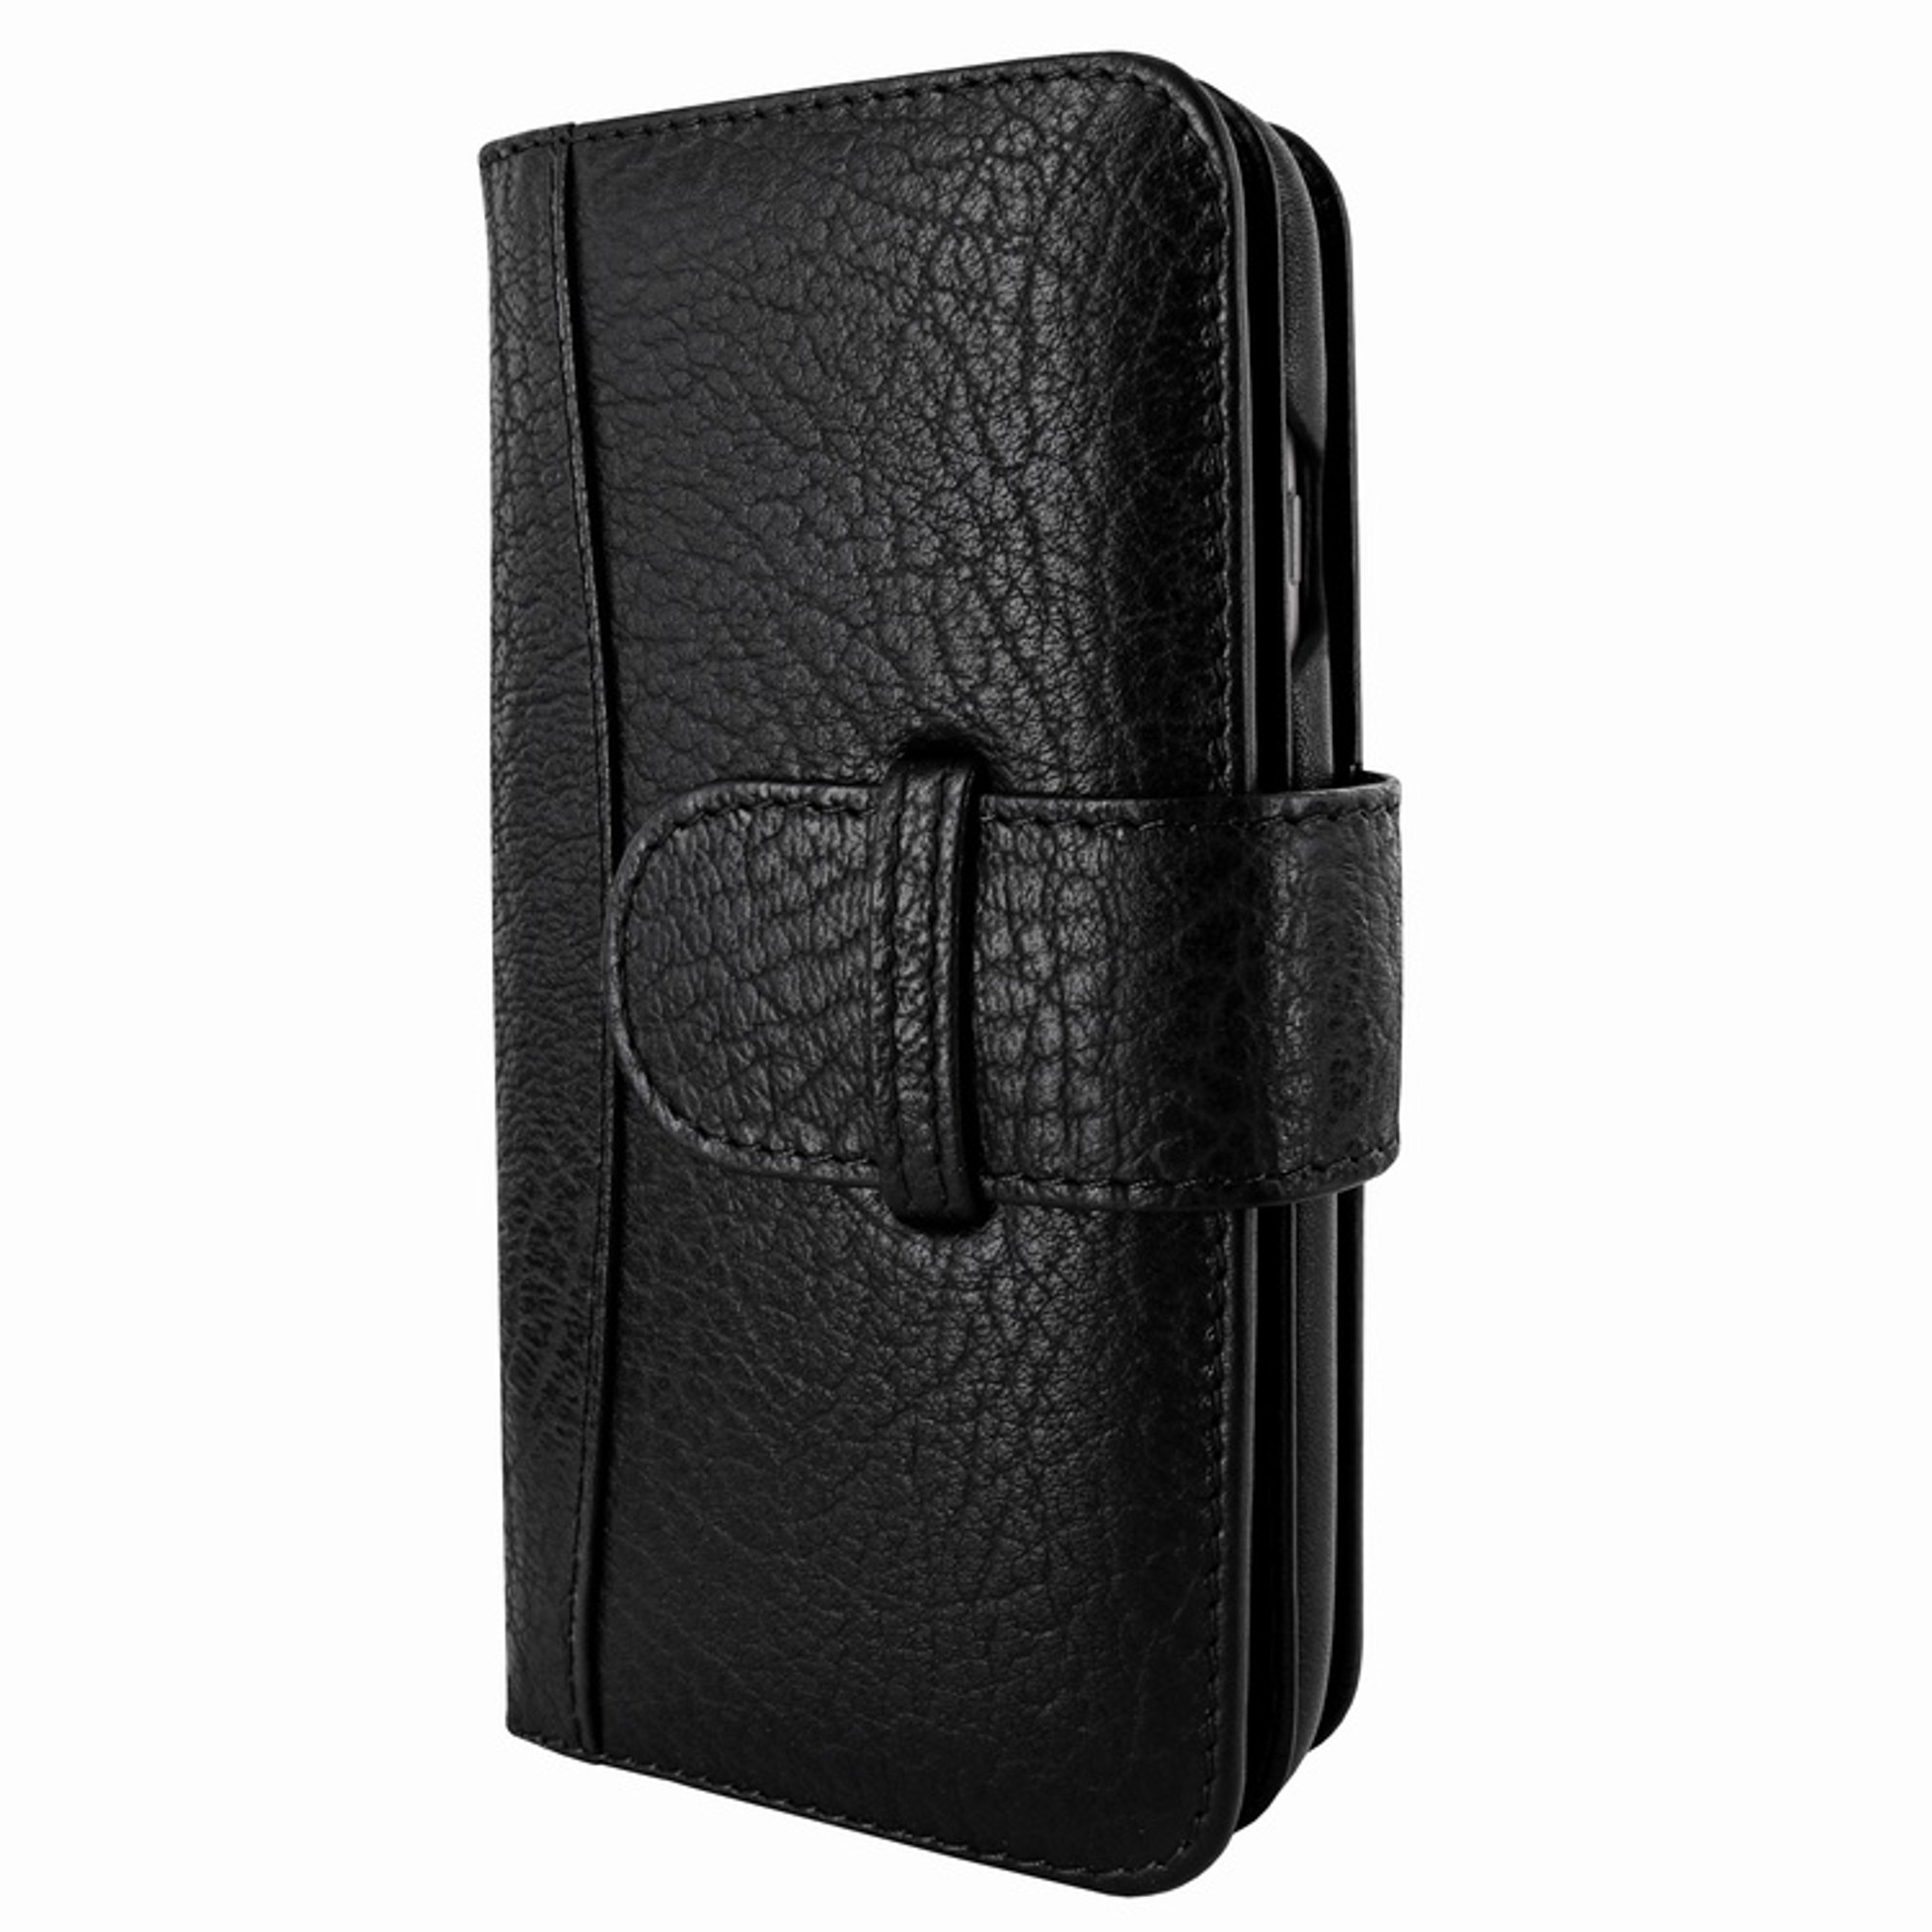 Piel Frama iPhone 7 / 8 WalletMagnum Leather Case - Black iForte